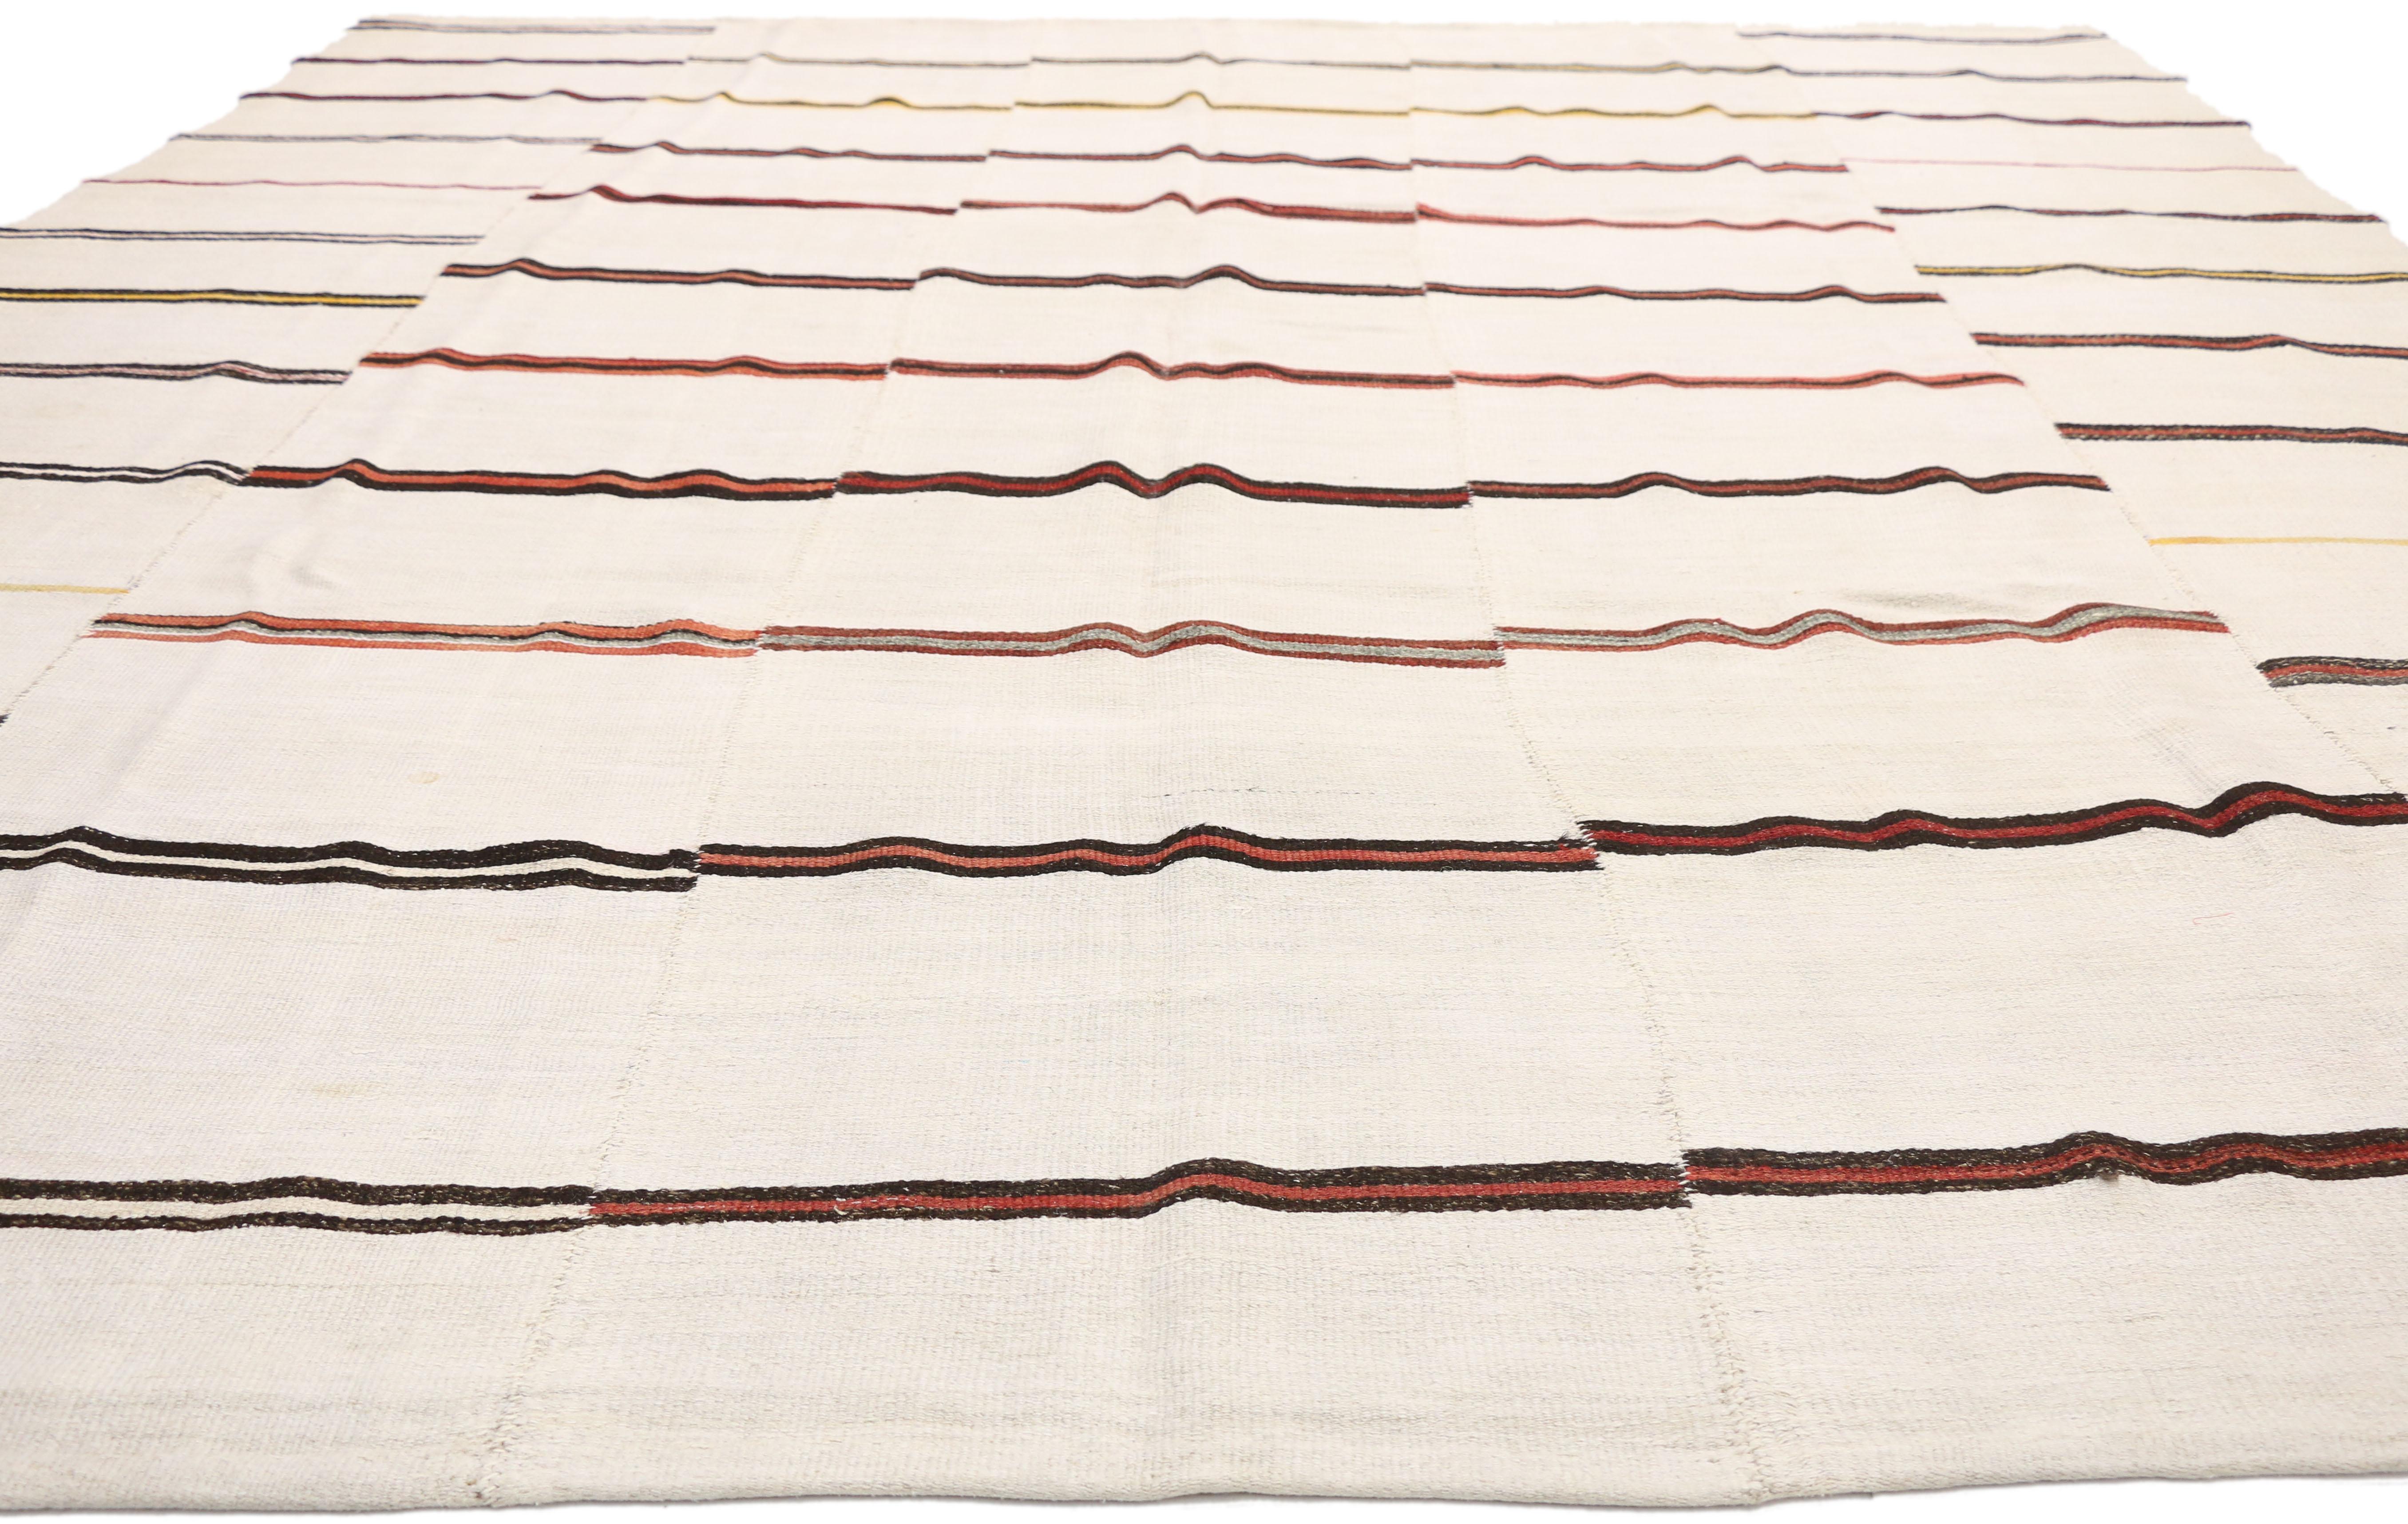 Turkish Vintage Striped Kilim Rug with Modernist Style, Large Flat-Weave Area Rug